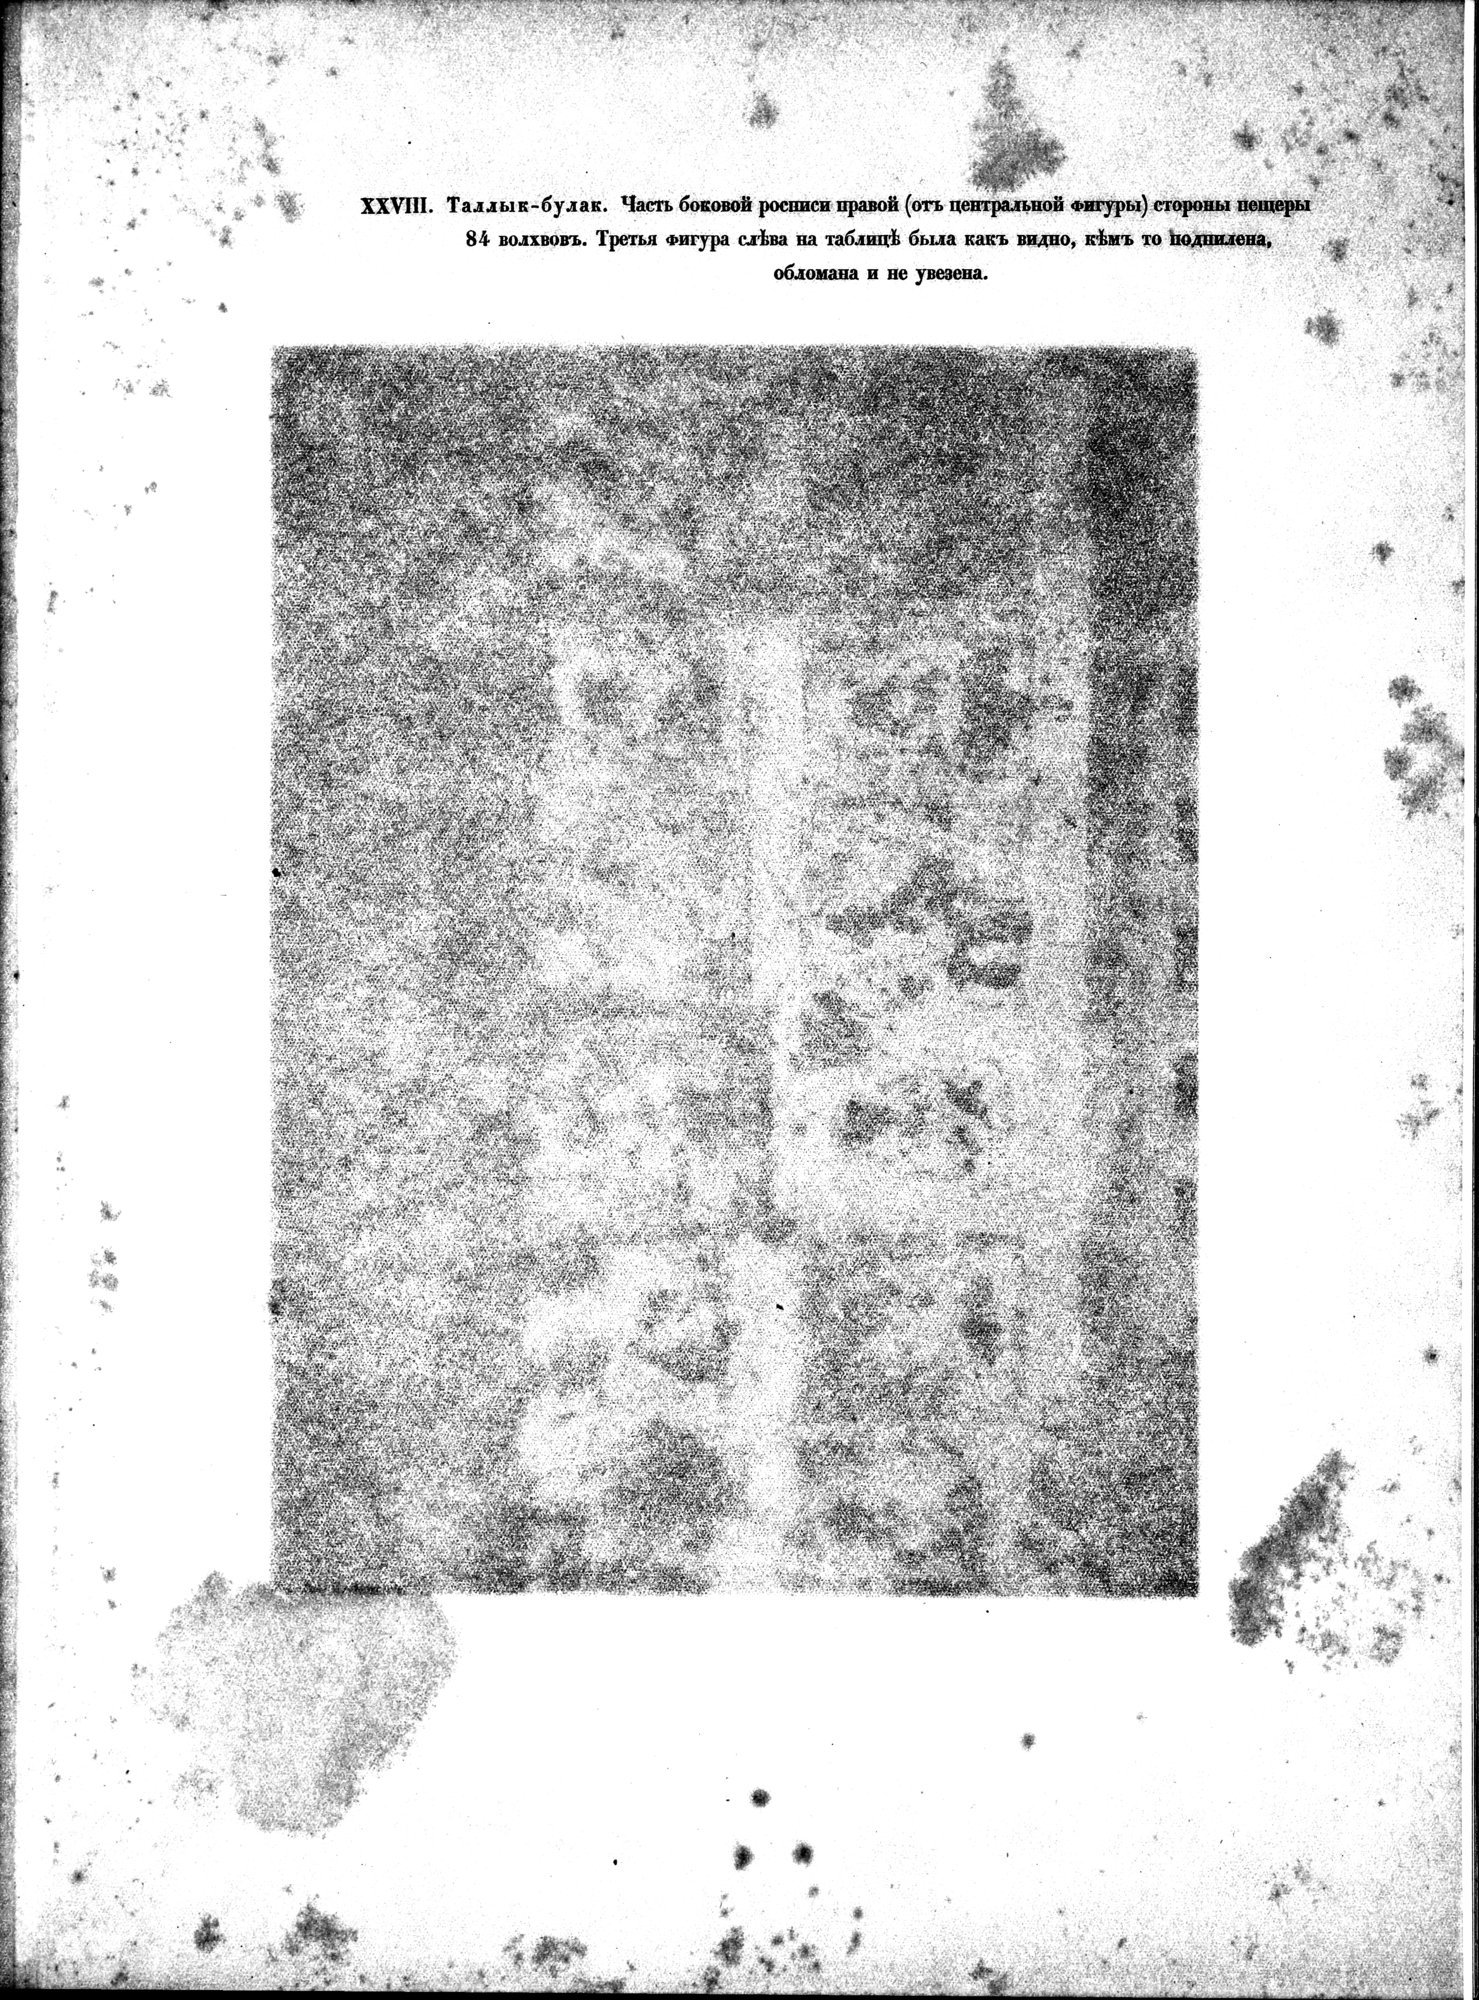 Russkaia Turkestanskaia Ekspeditsiia, 1909-1910 goda : vol.1 / Page 211 (Grayscale High Resolution Image)